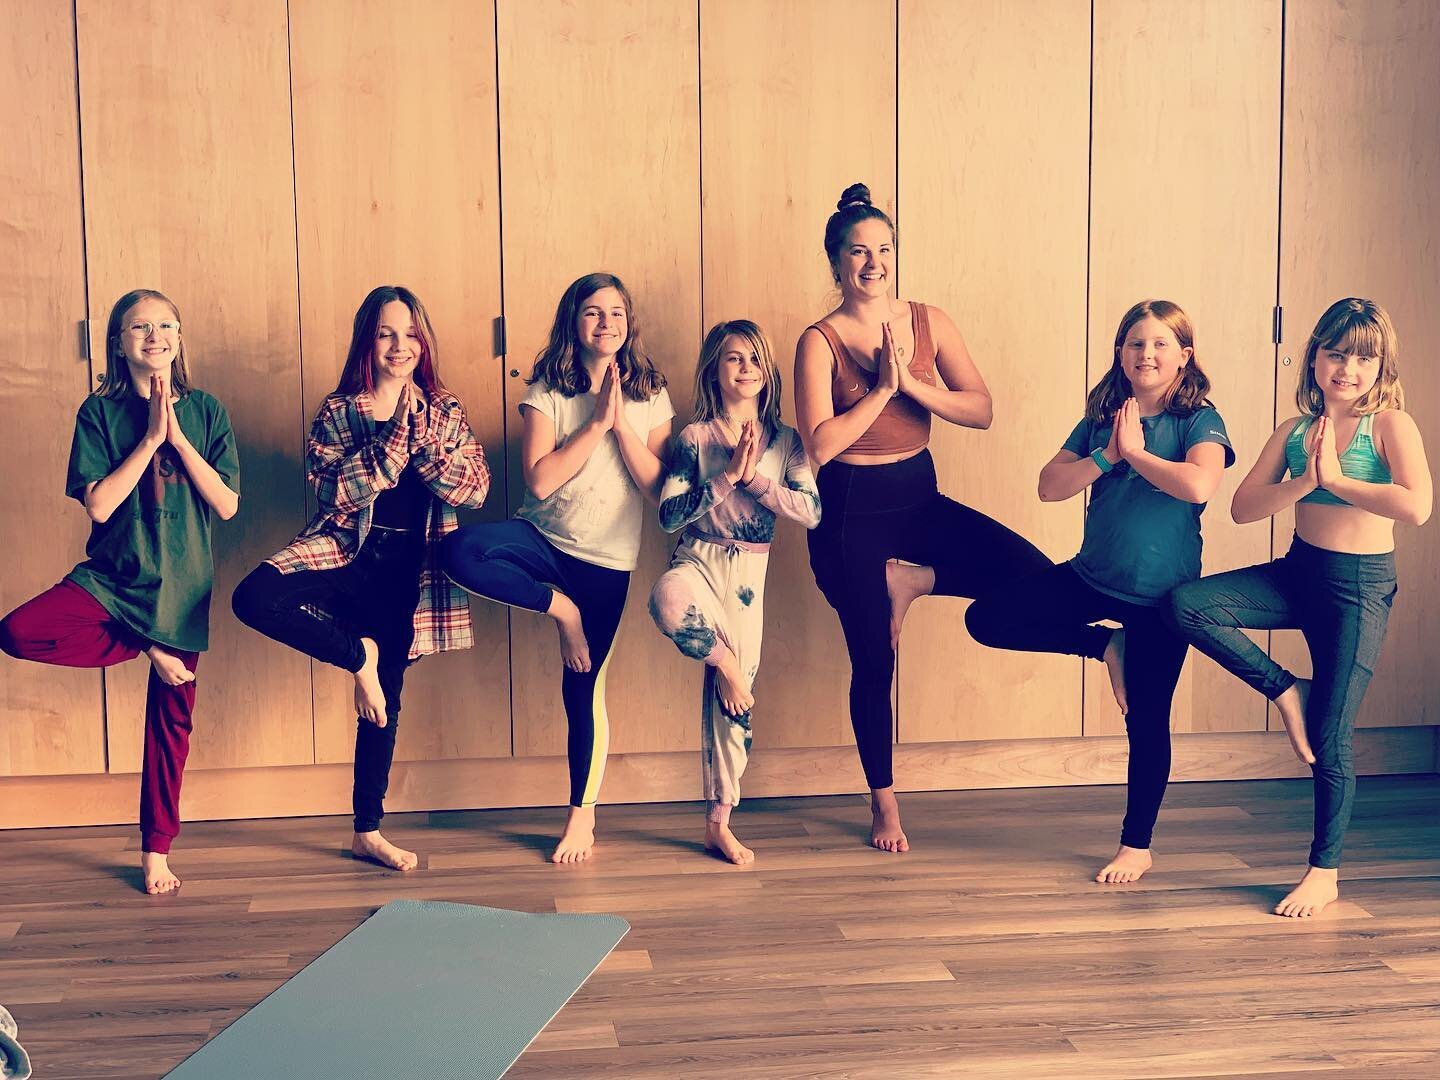 Last class today with a great group of tween yogis ✨ 🌲💜
#yoga #kidsyoga #yogeeverydamnday #treepose #yogafortweens #balance